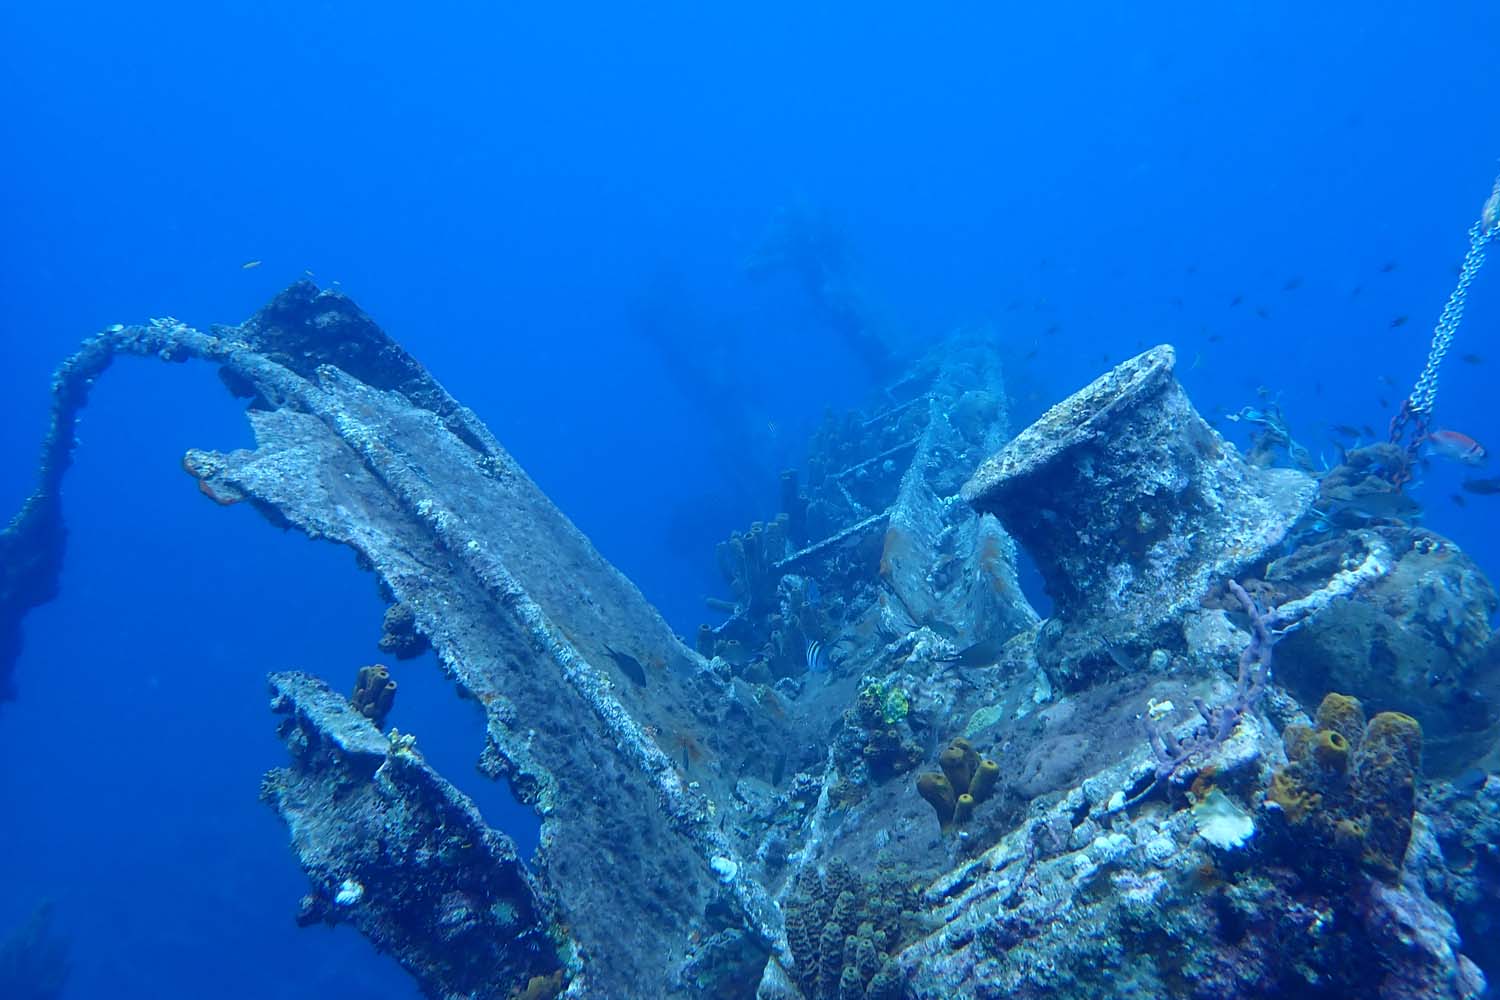 Antilla Shipwreck Seascooter Snorkeling Tour